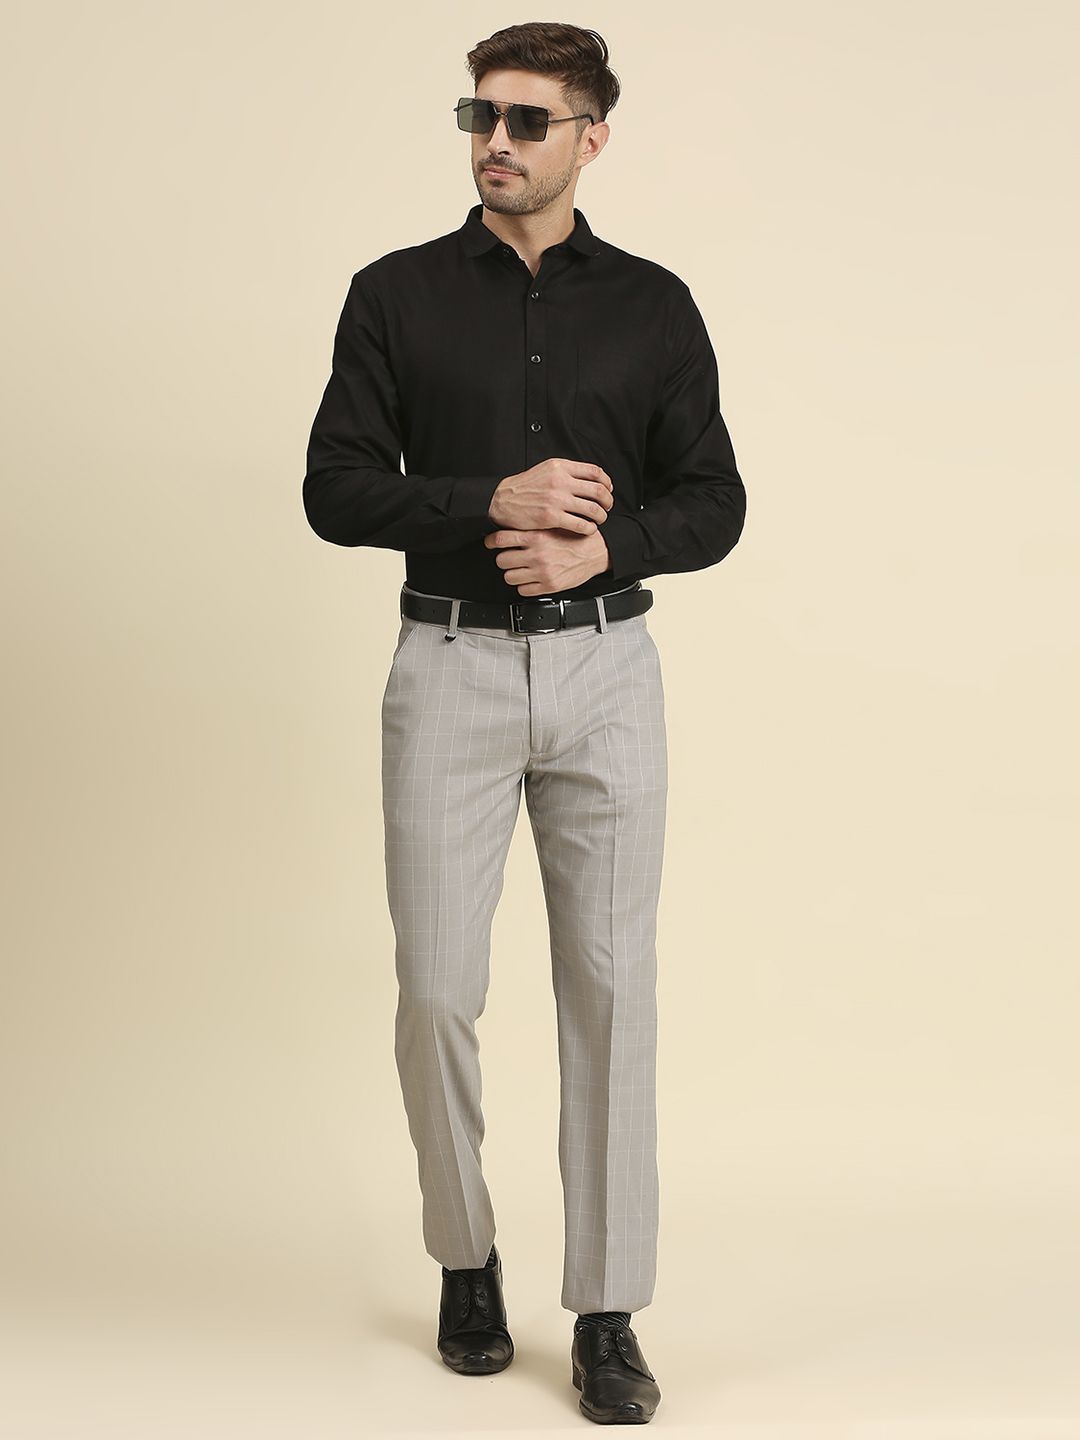 Buy Black Formal Shirt for Men Online in India  JAPs Premium Urbanwear  Color Black SizeShirt S